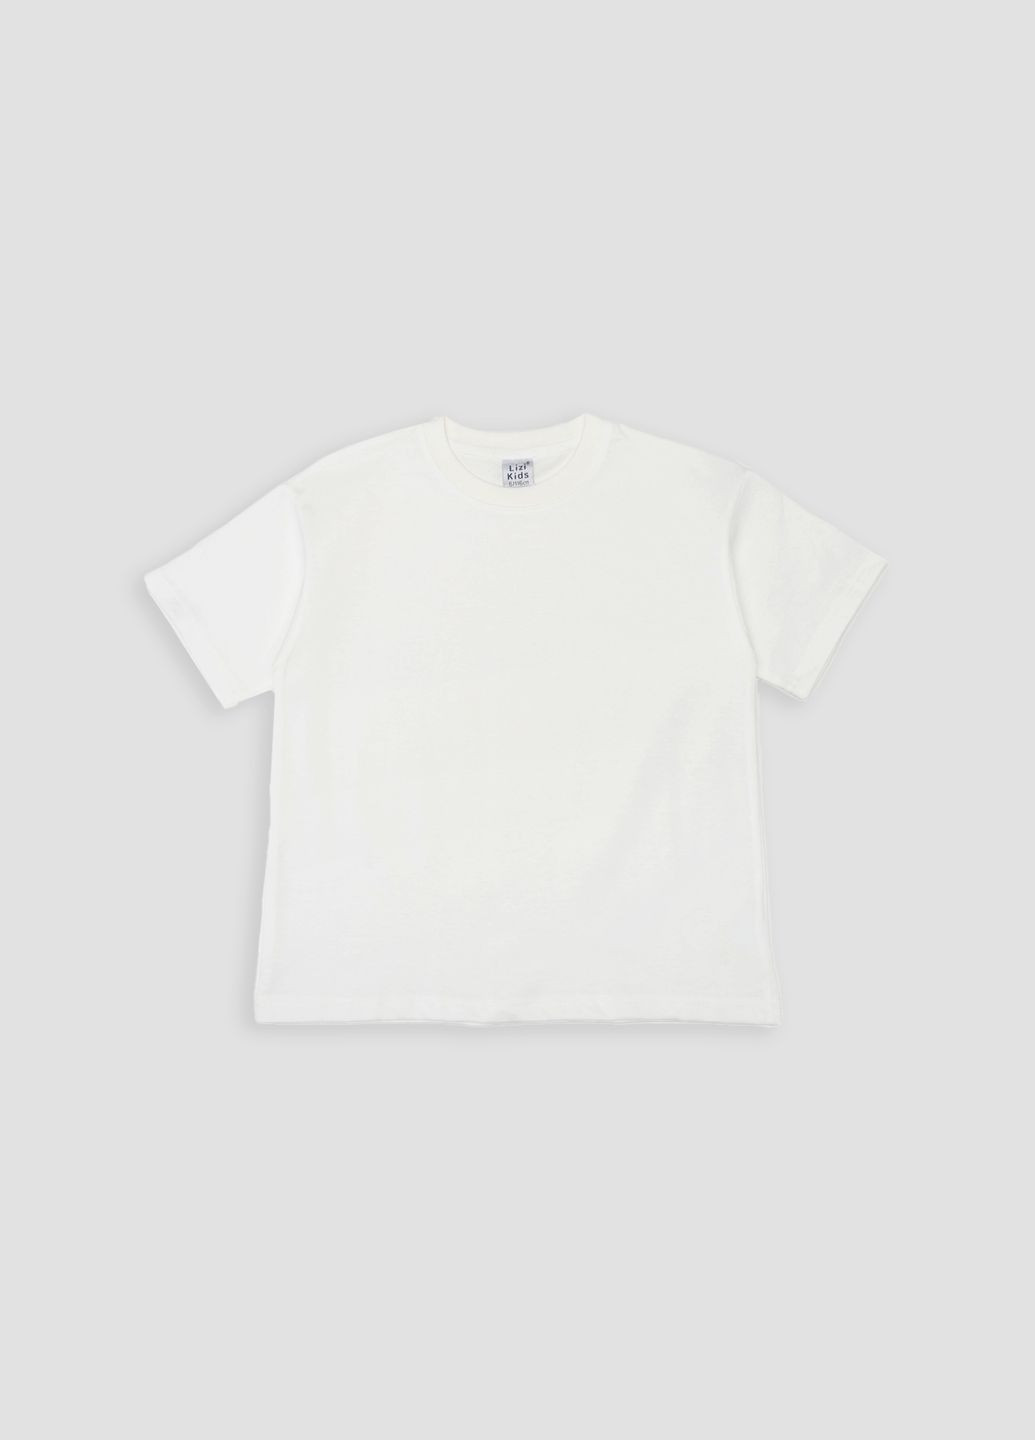 Белая летняя футболка с коротким рукавом для мальчика цвет белый цб-00243550 Lizi Kids